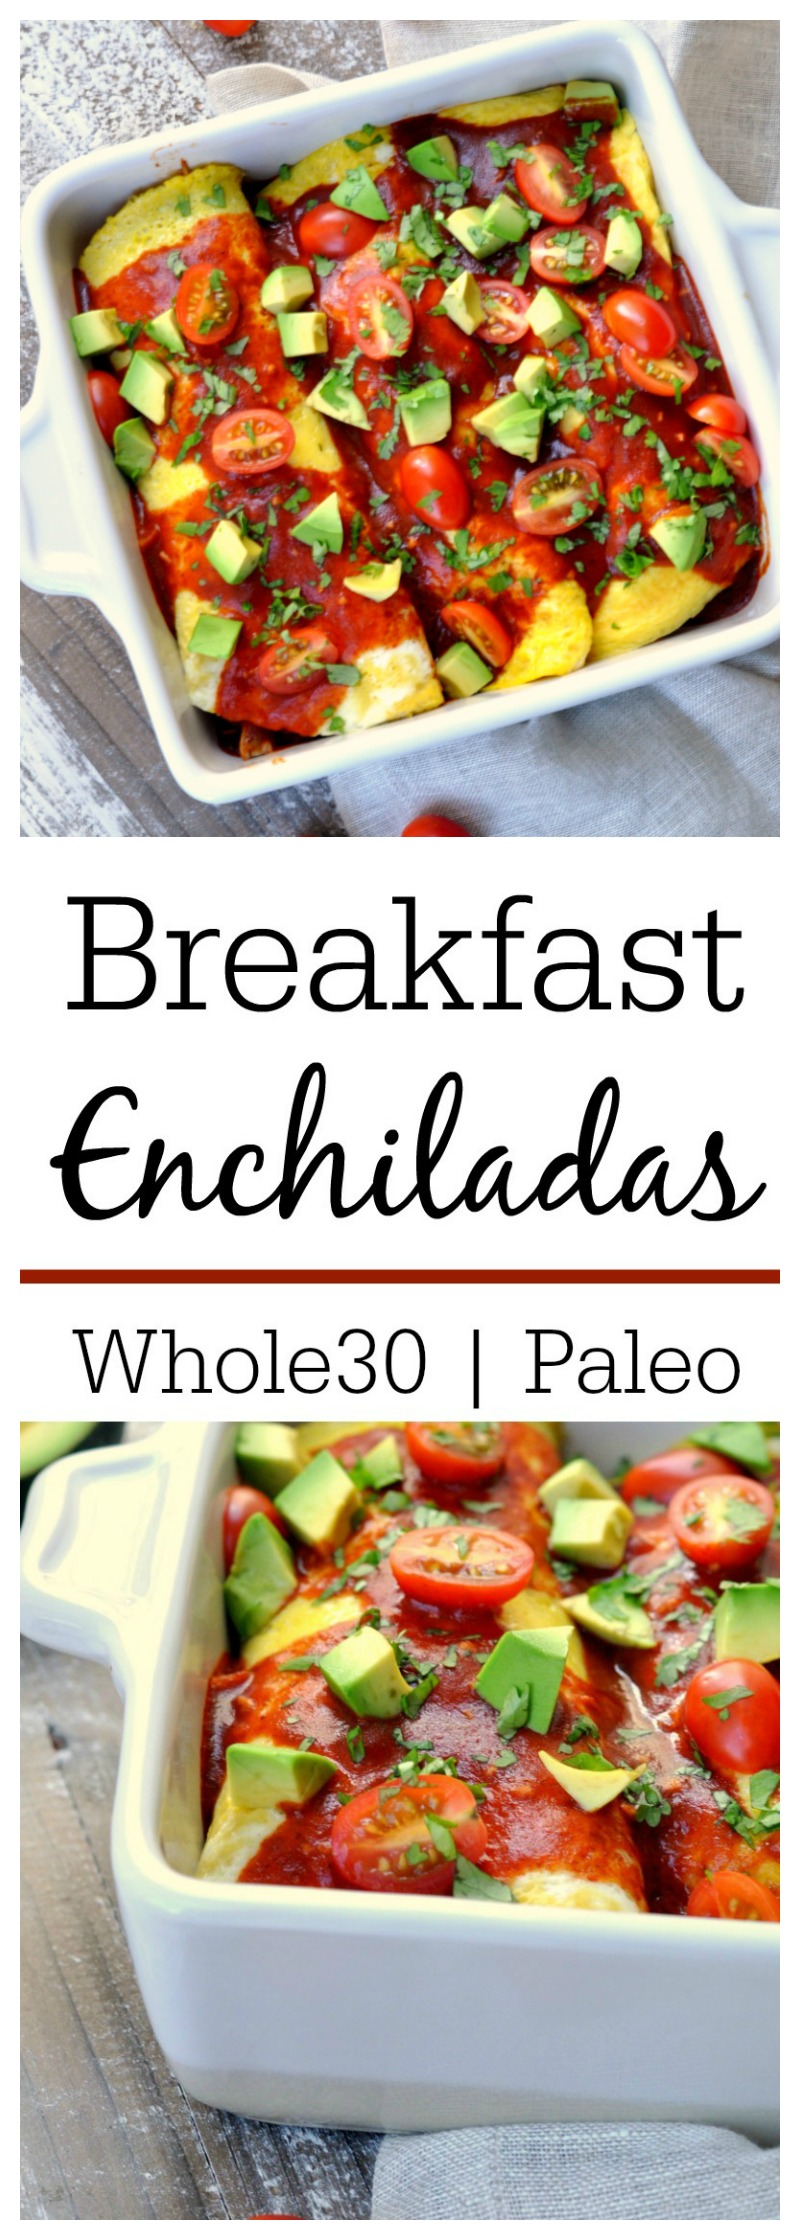 Paleo Breakfast Enchiladas - Whole30 Compliant